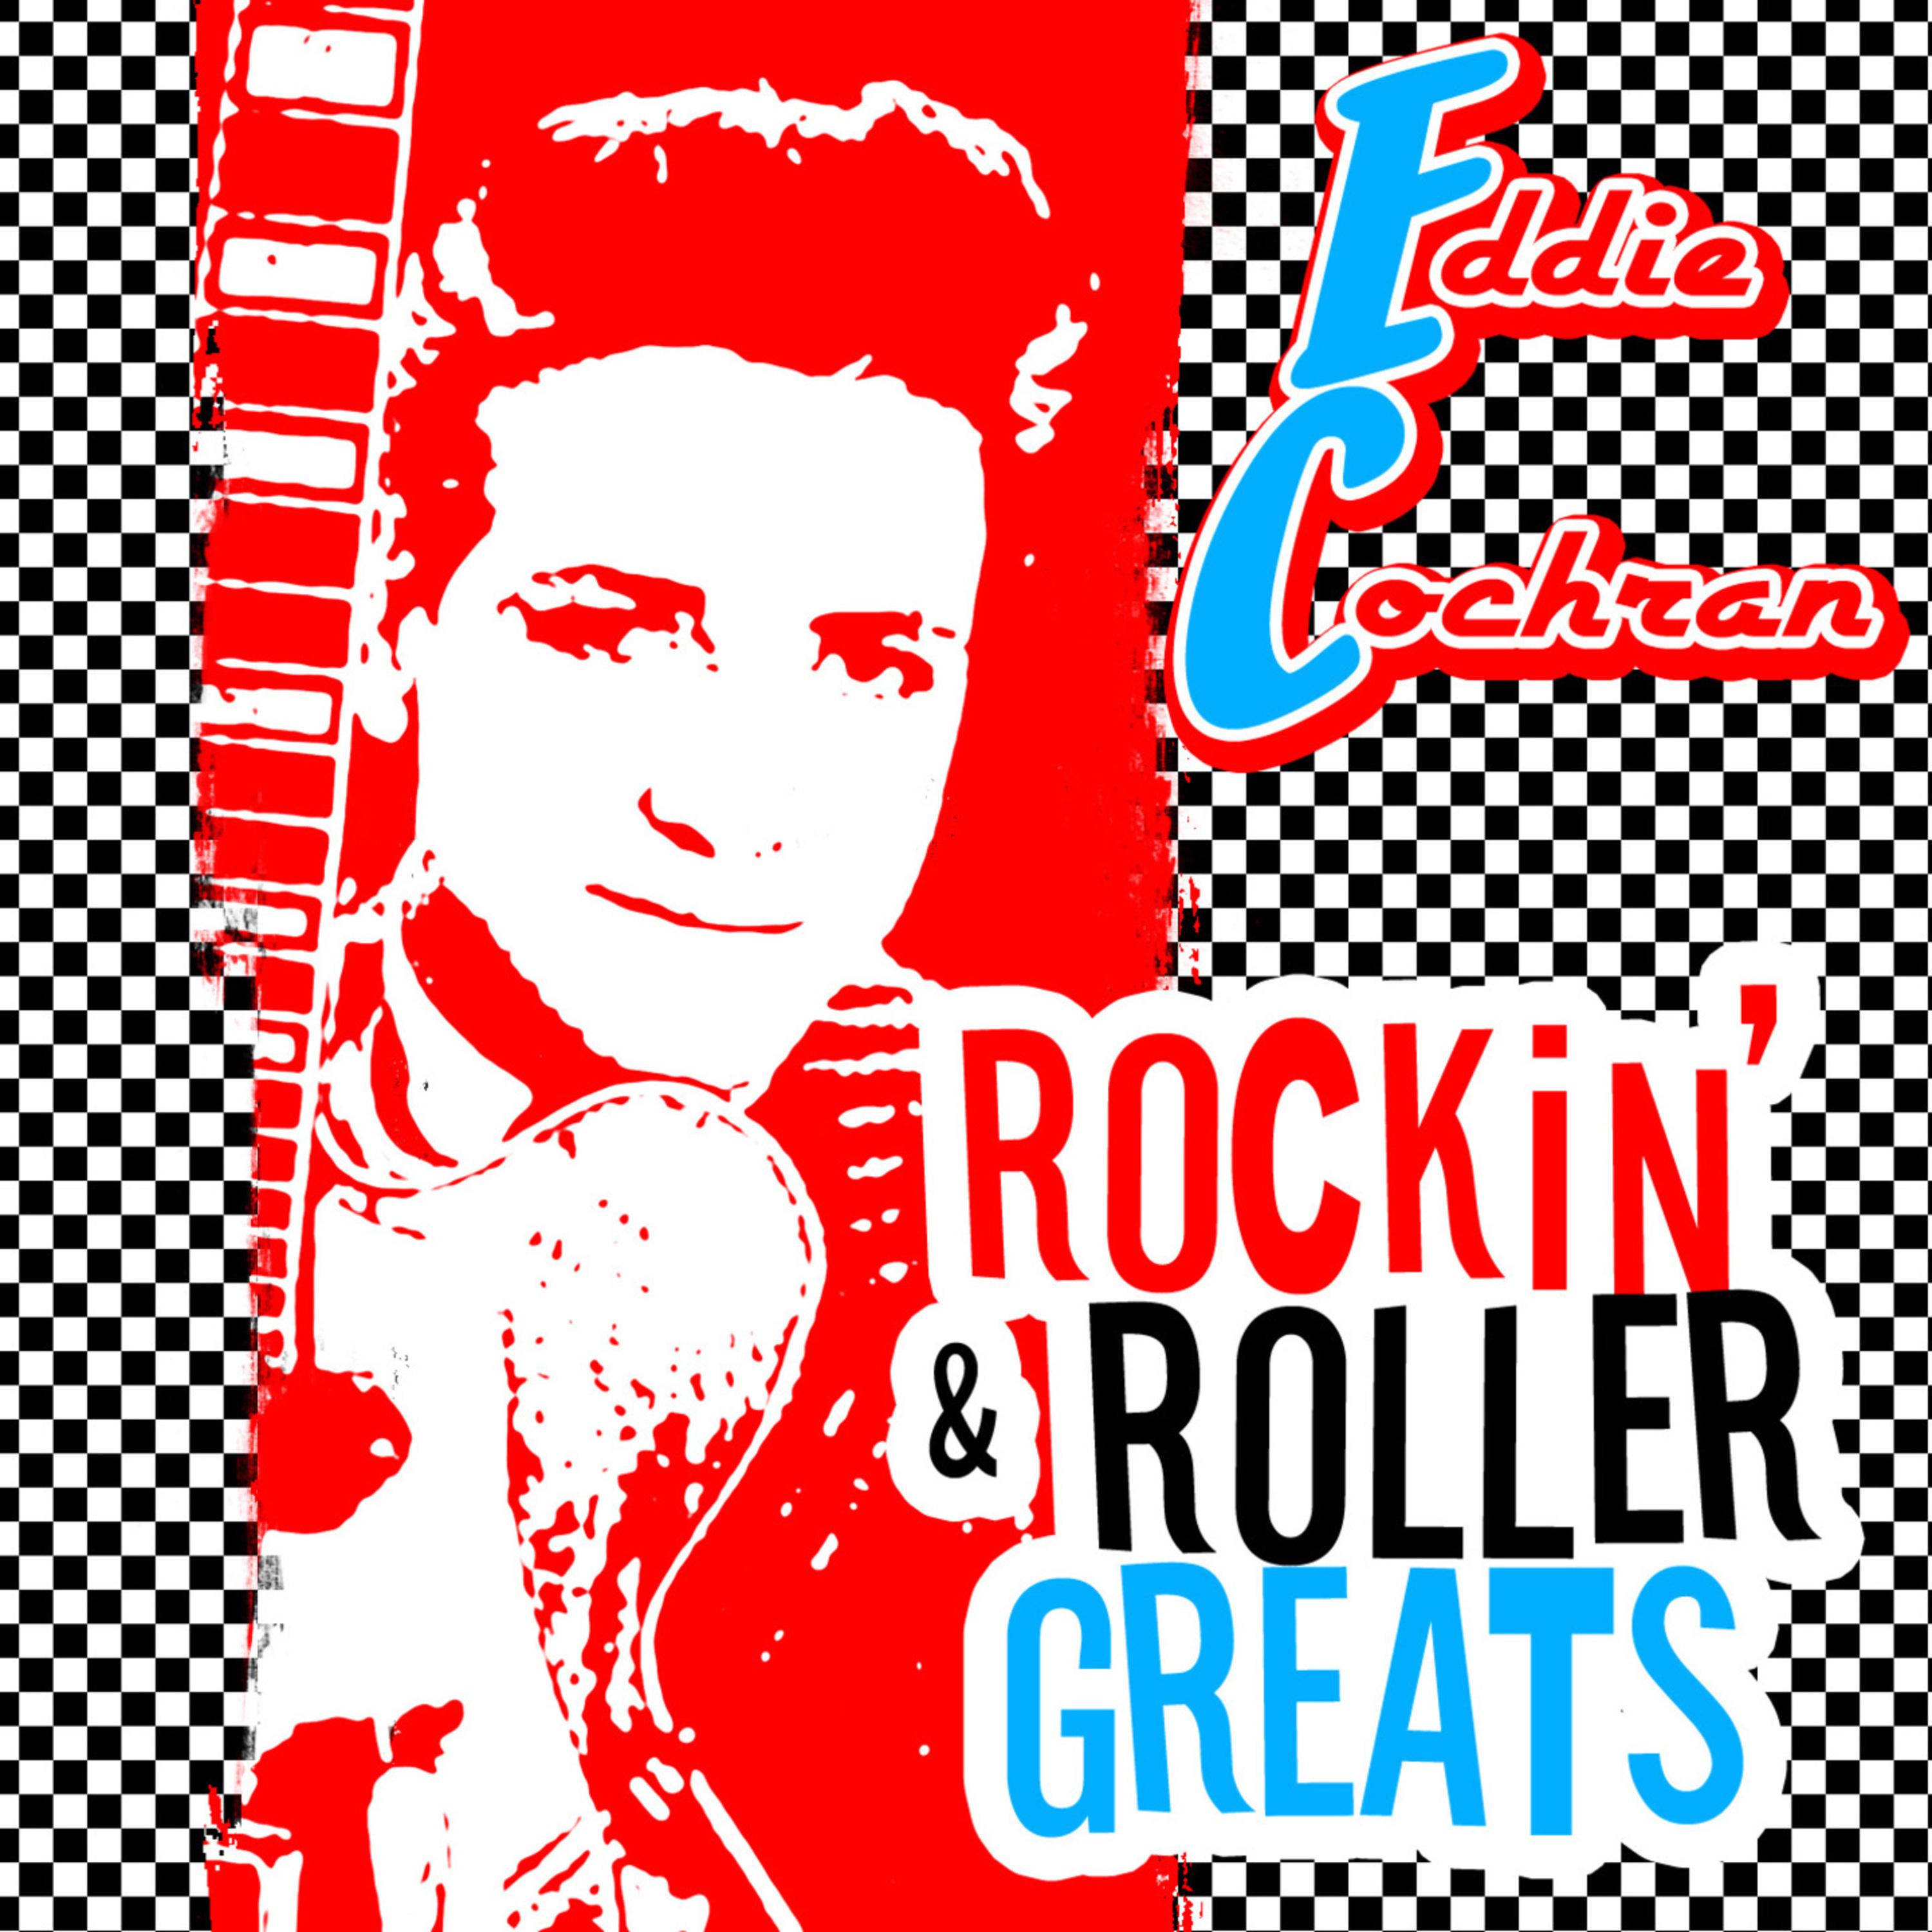 Rockin' And Roller Greats - Eddie Cochran